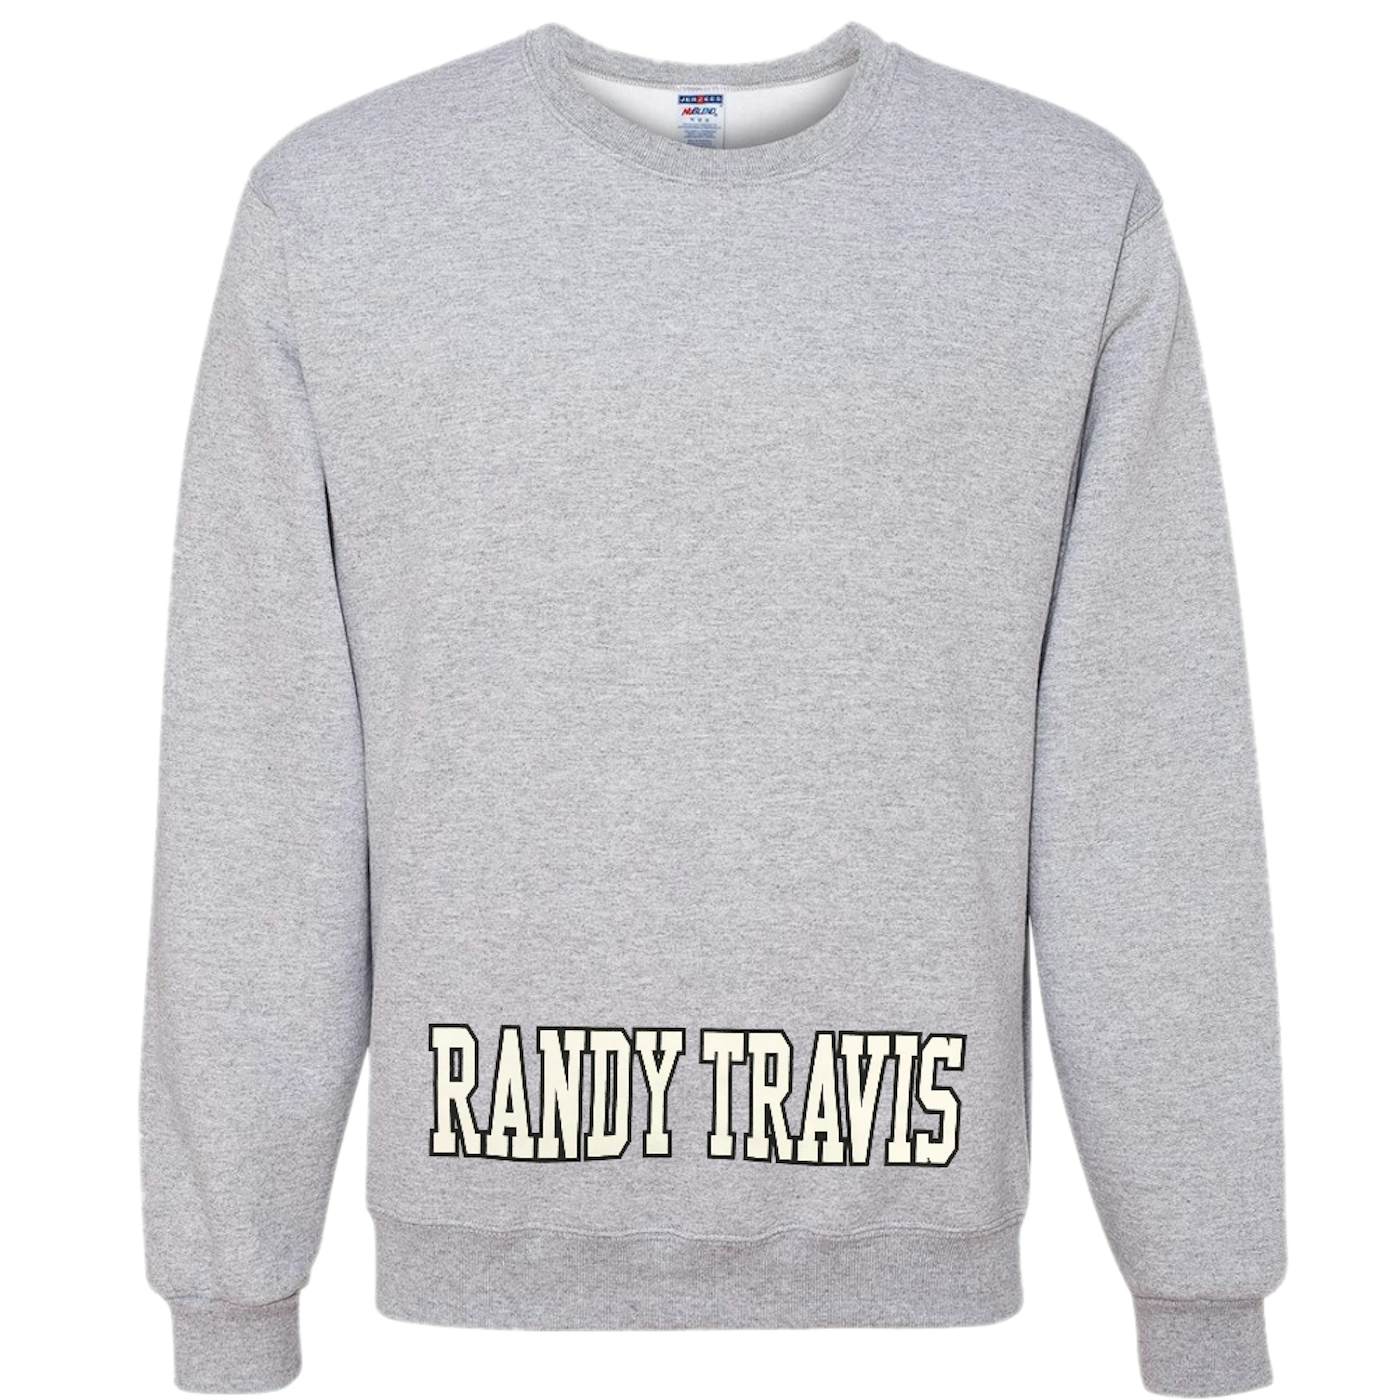 Randy Travis Ash Crew Neck Sweatshirt